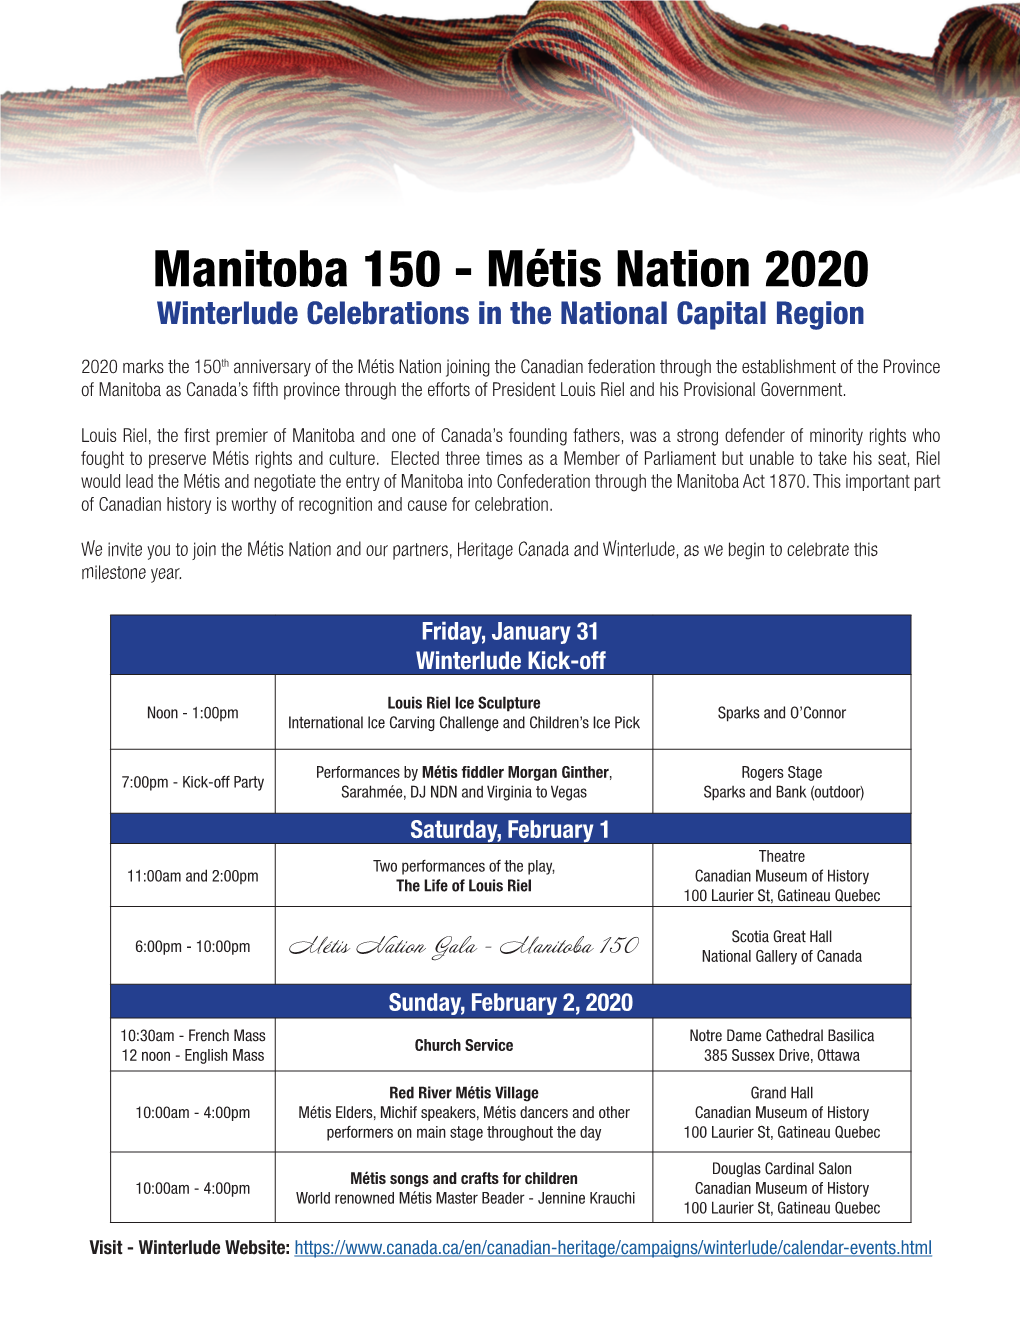 Manitoba 150 - Métis Nation 2020 Winterlude Celebrations in the National Capital Region